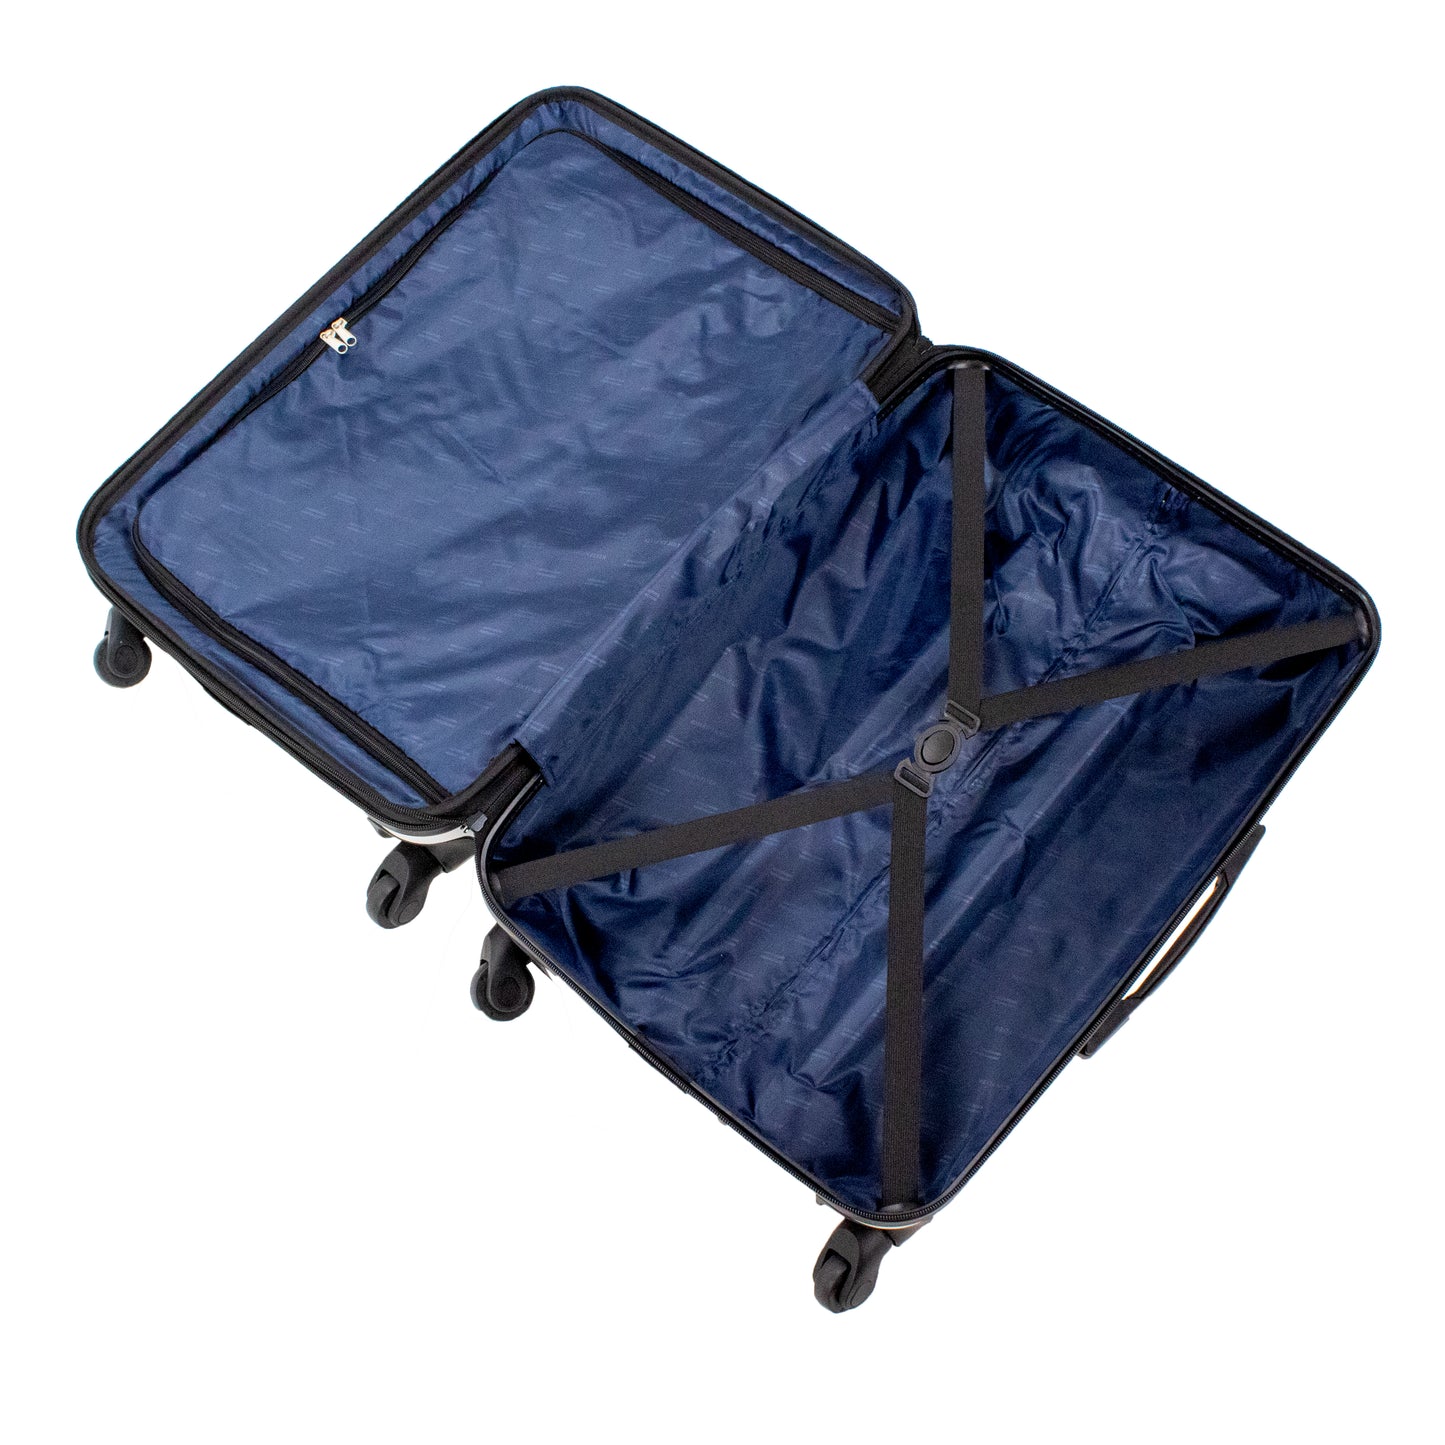 American Flyer Knox 3-Piece Hardside Spinner Luggage Set